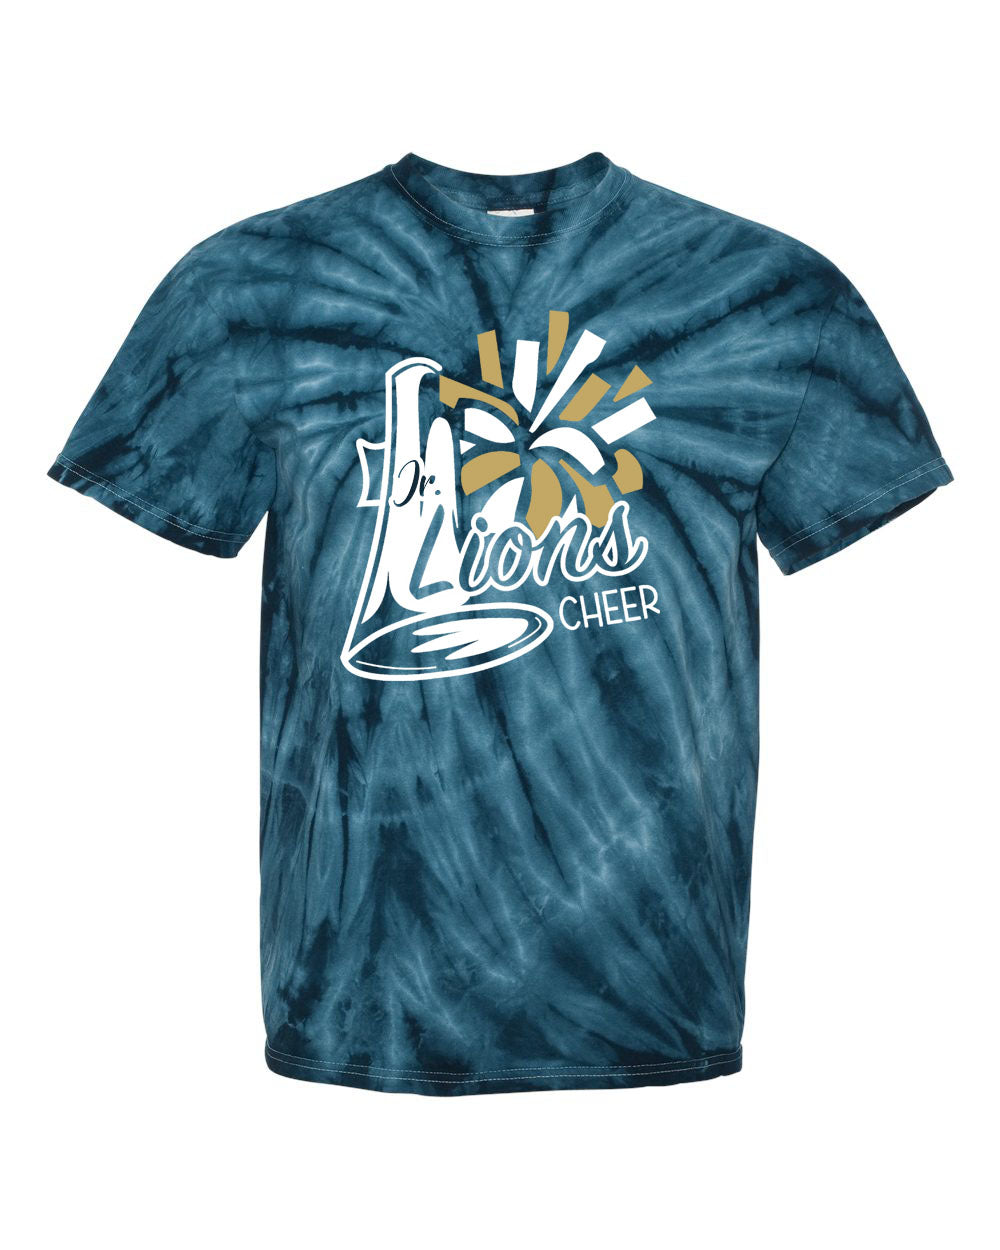 Lions Cheer Design 2 Tie Dye t-shirt